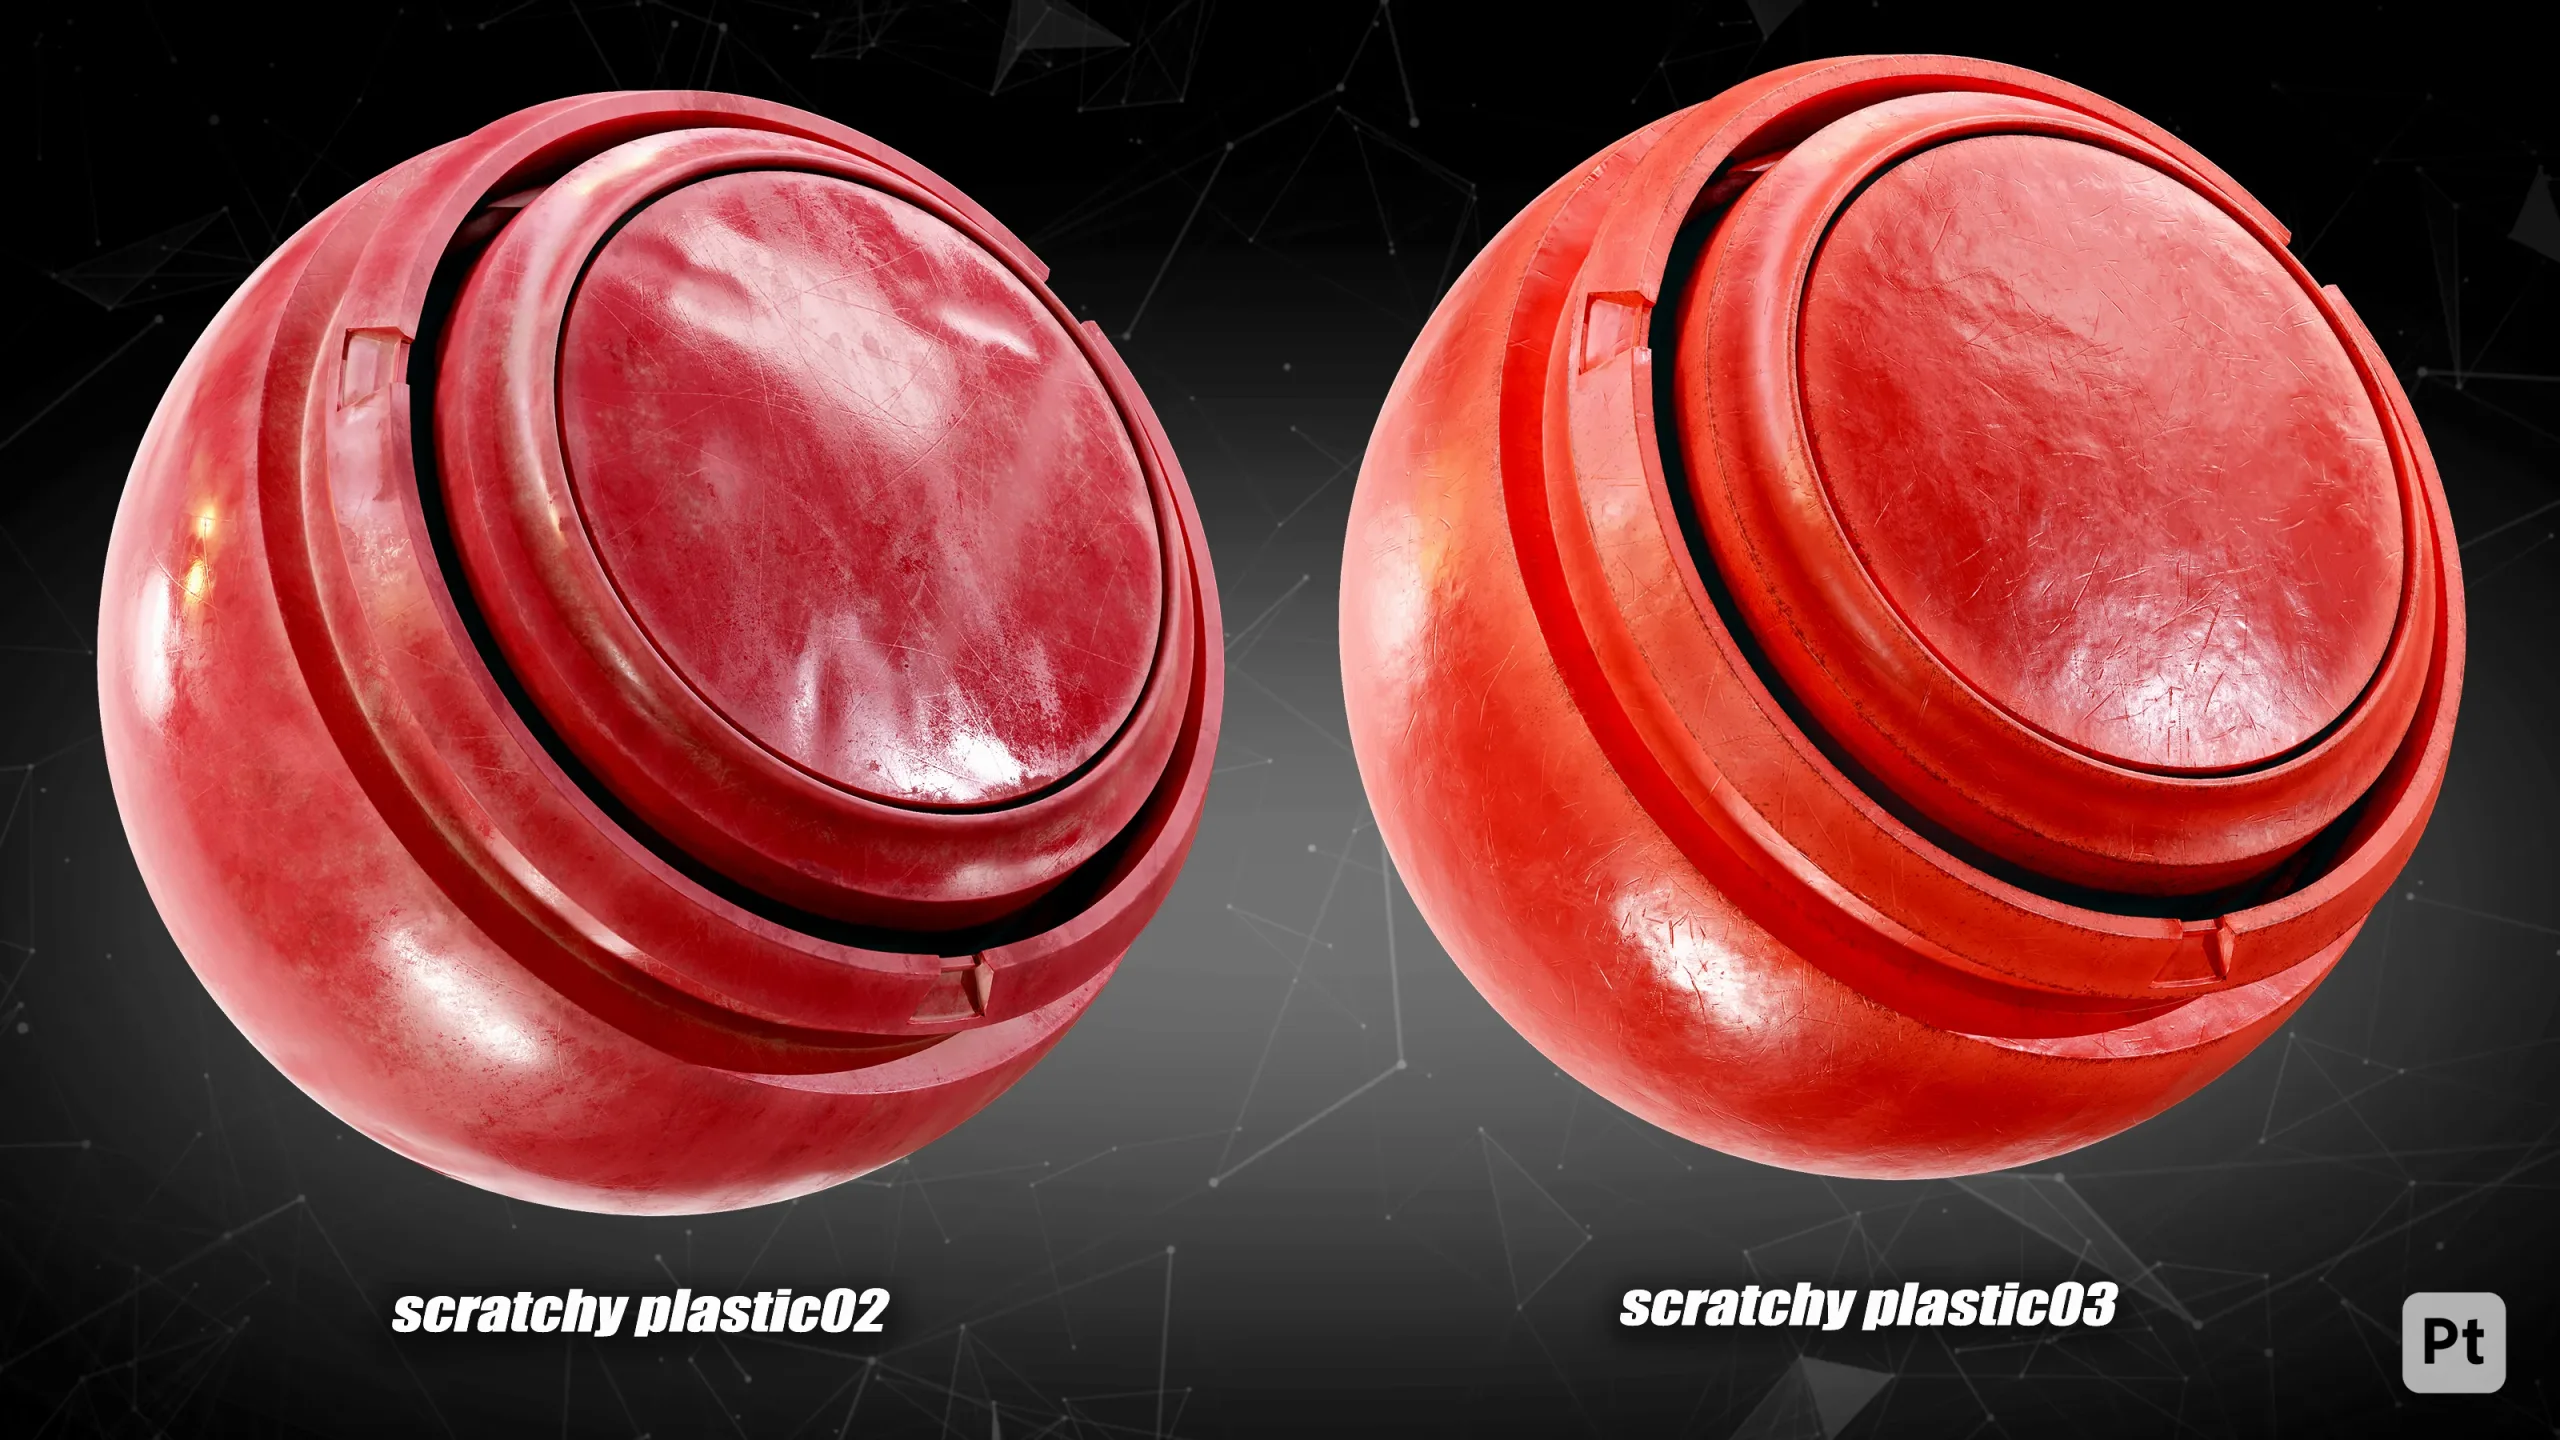 30 Plastic Smart Materials For Substance Painter_VOL01